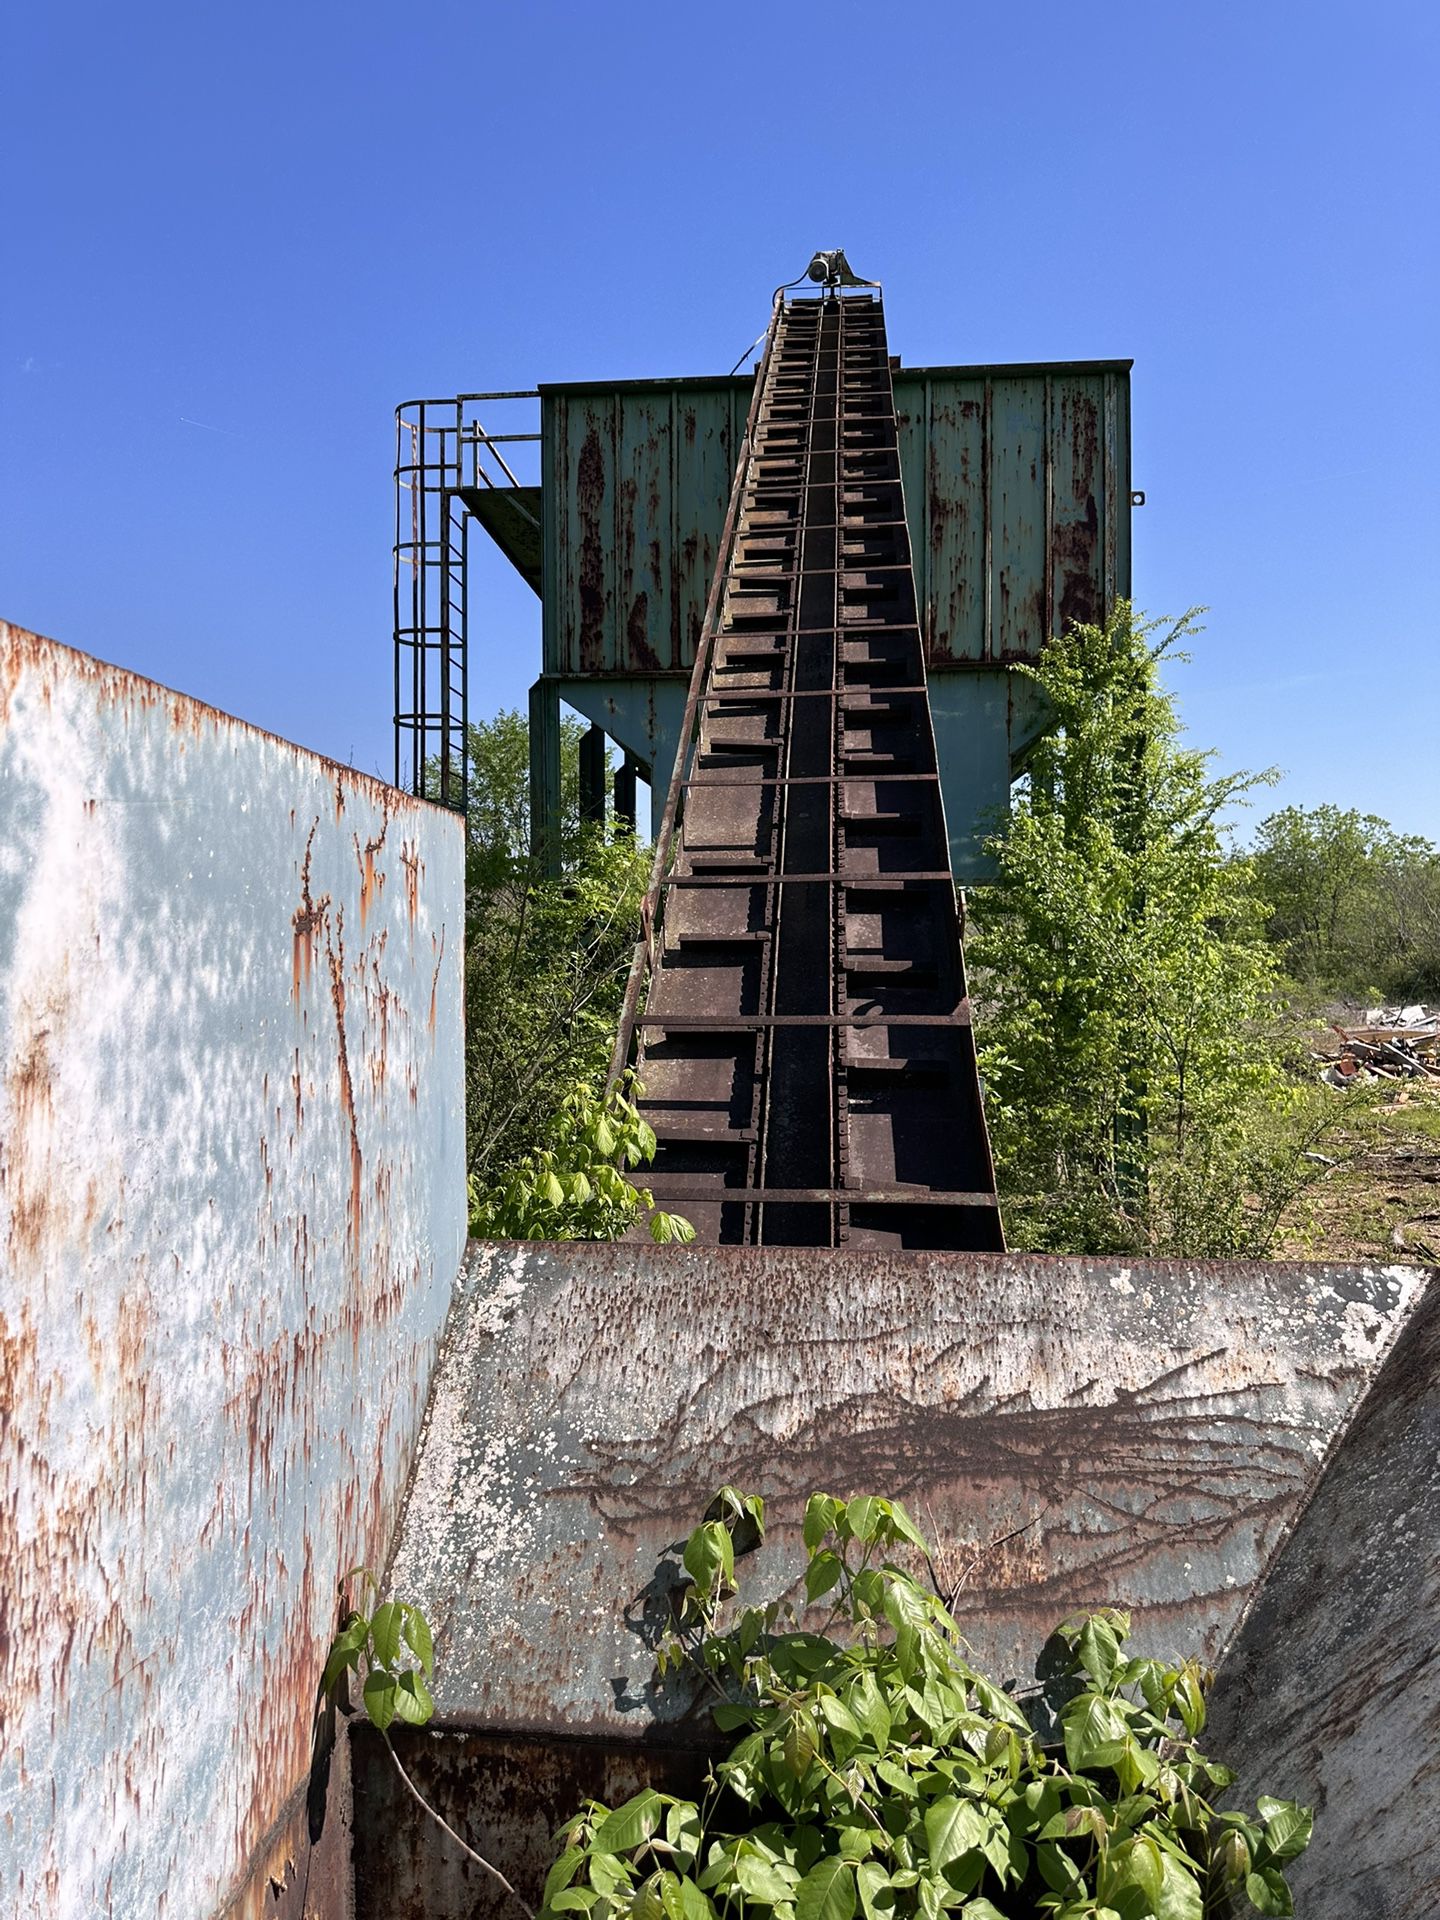 Giant Steel Hopper, Conveyor & Wood Grinder.